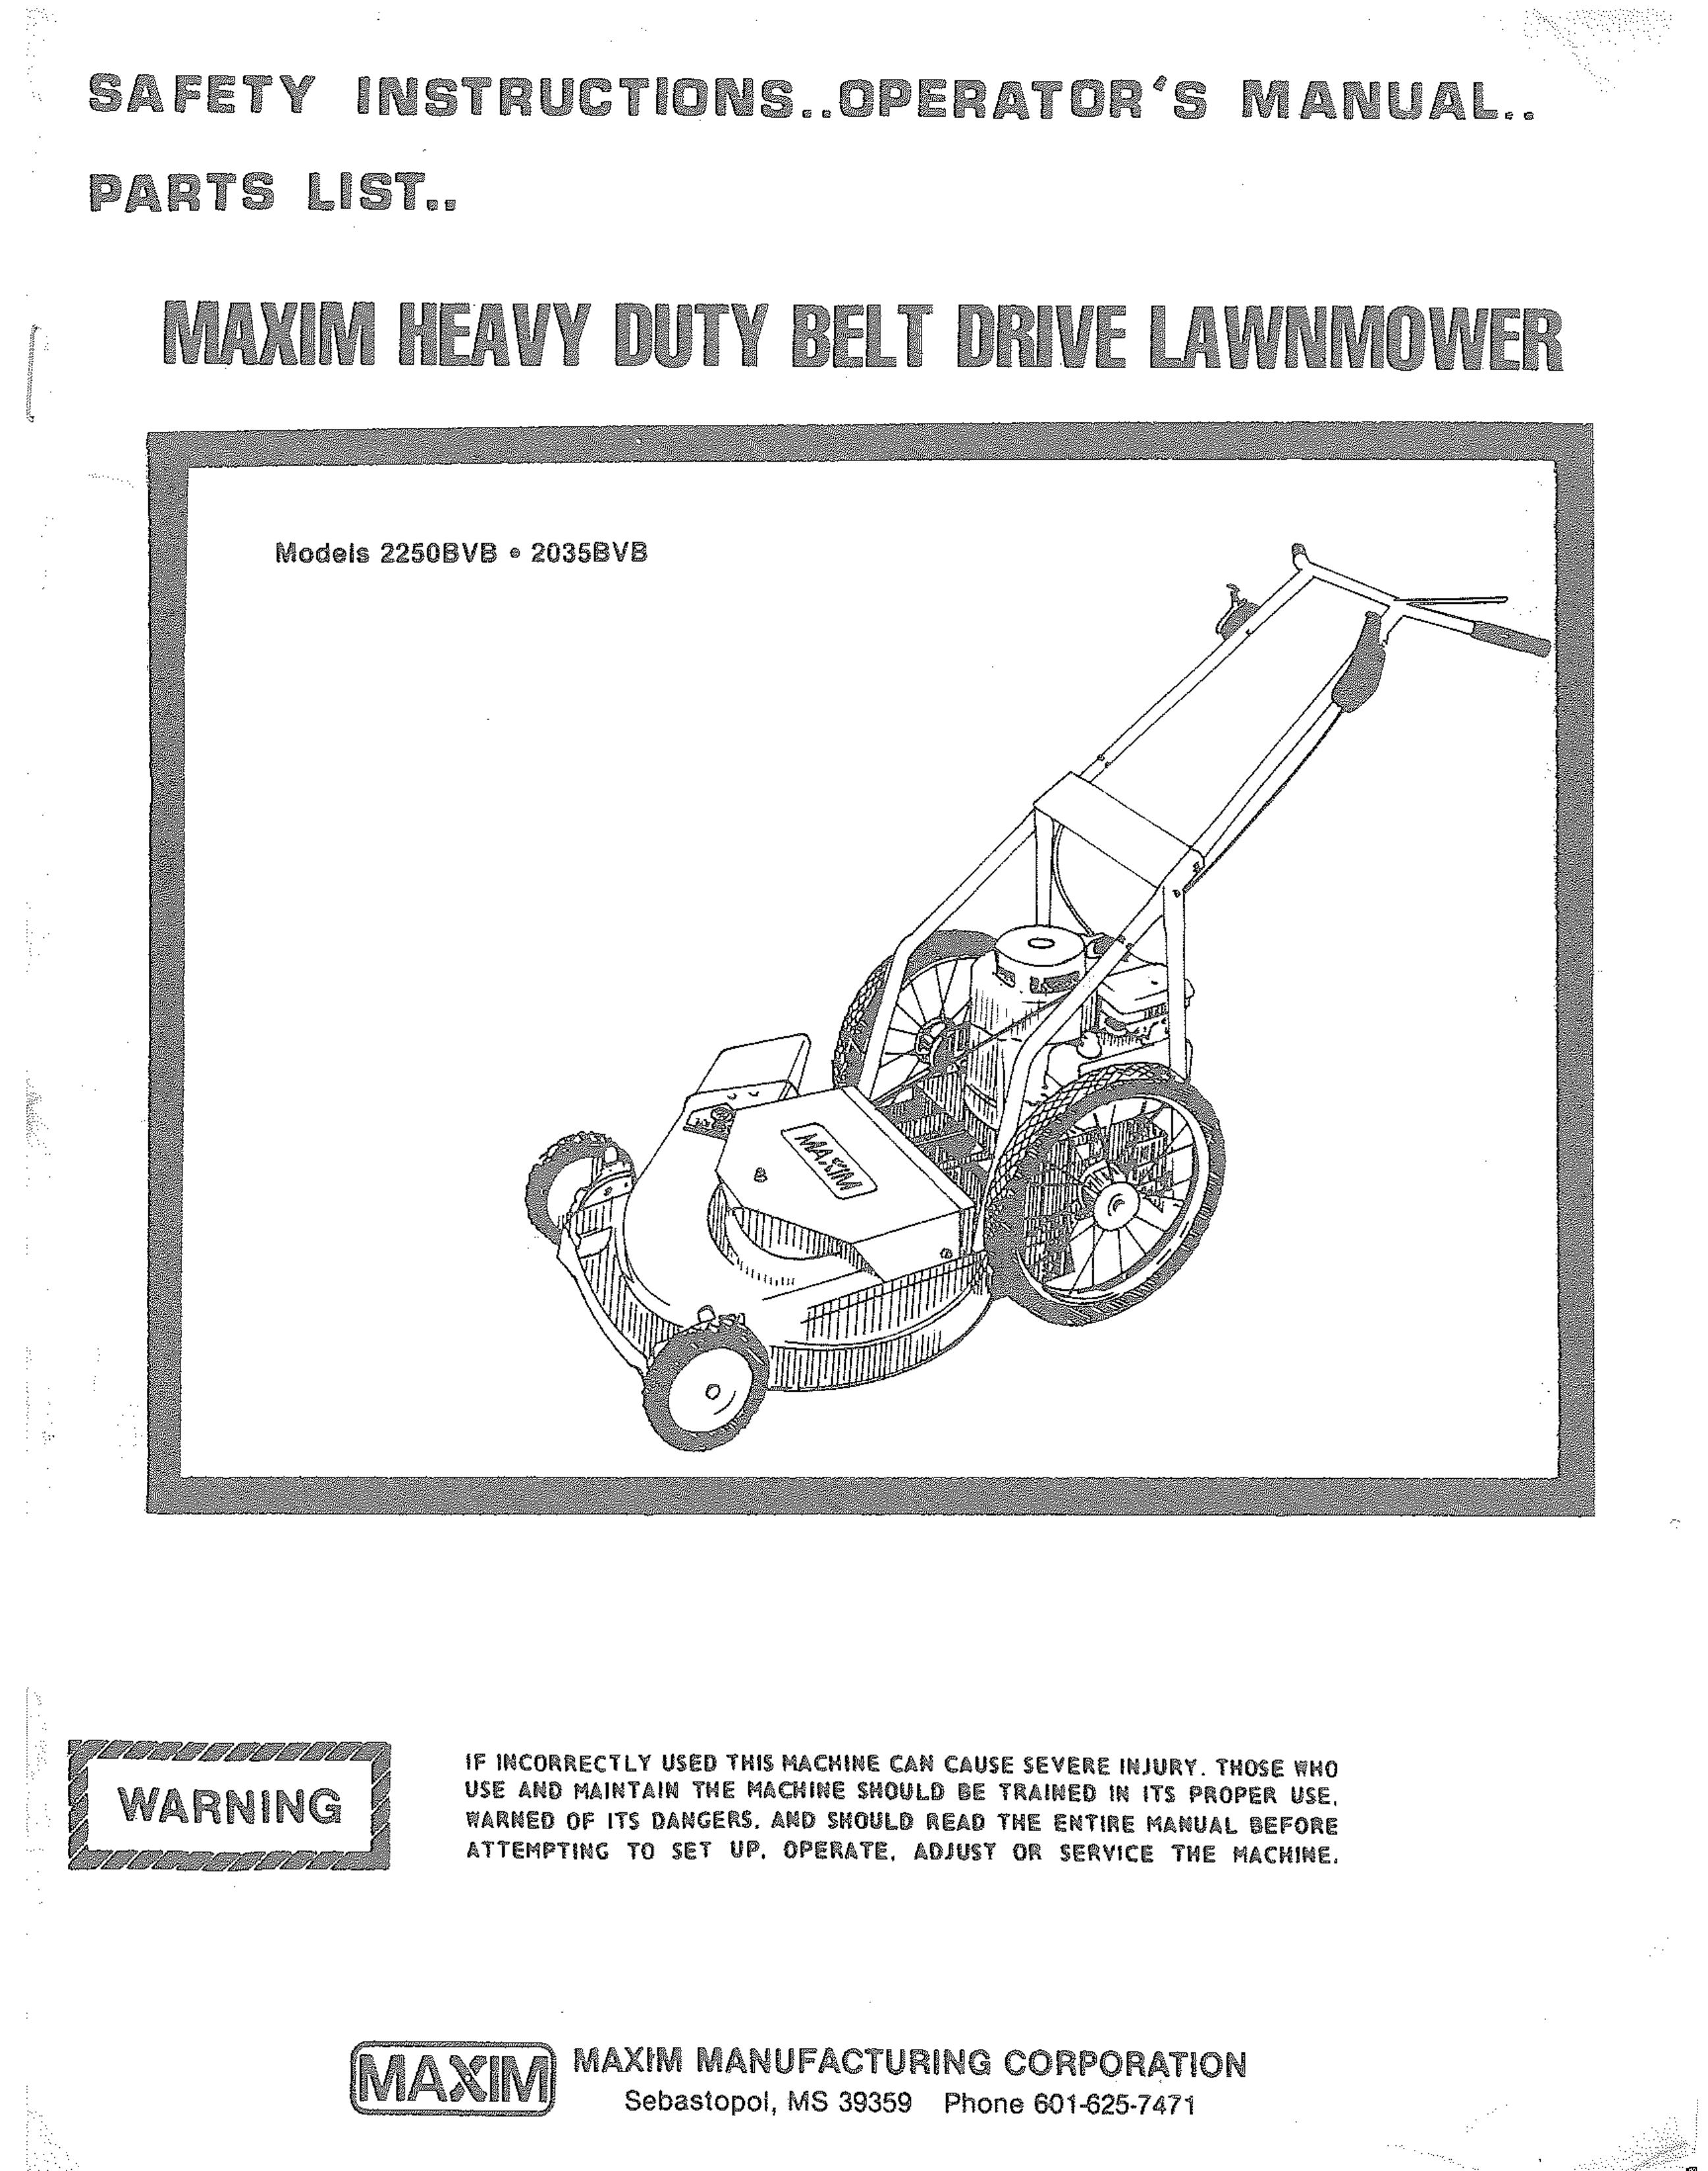 Maxim 2035BVB Lawn Mower User Manual